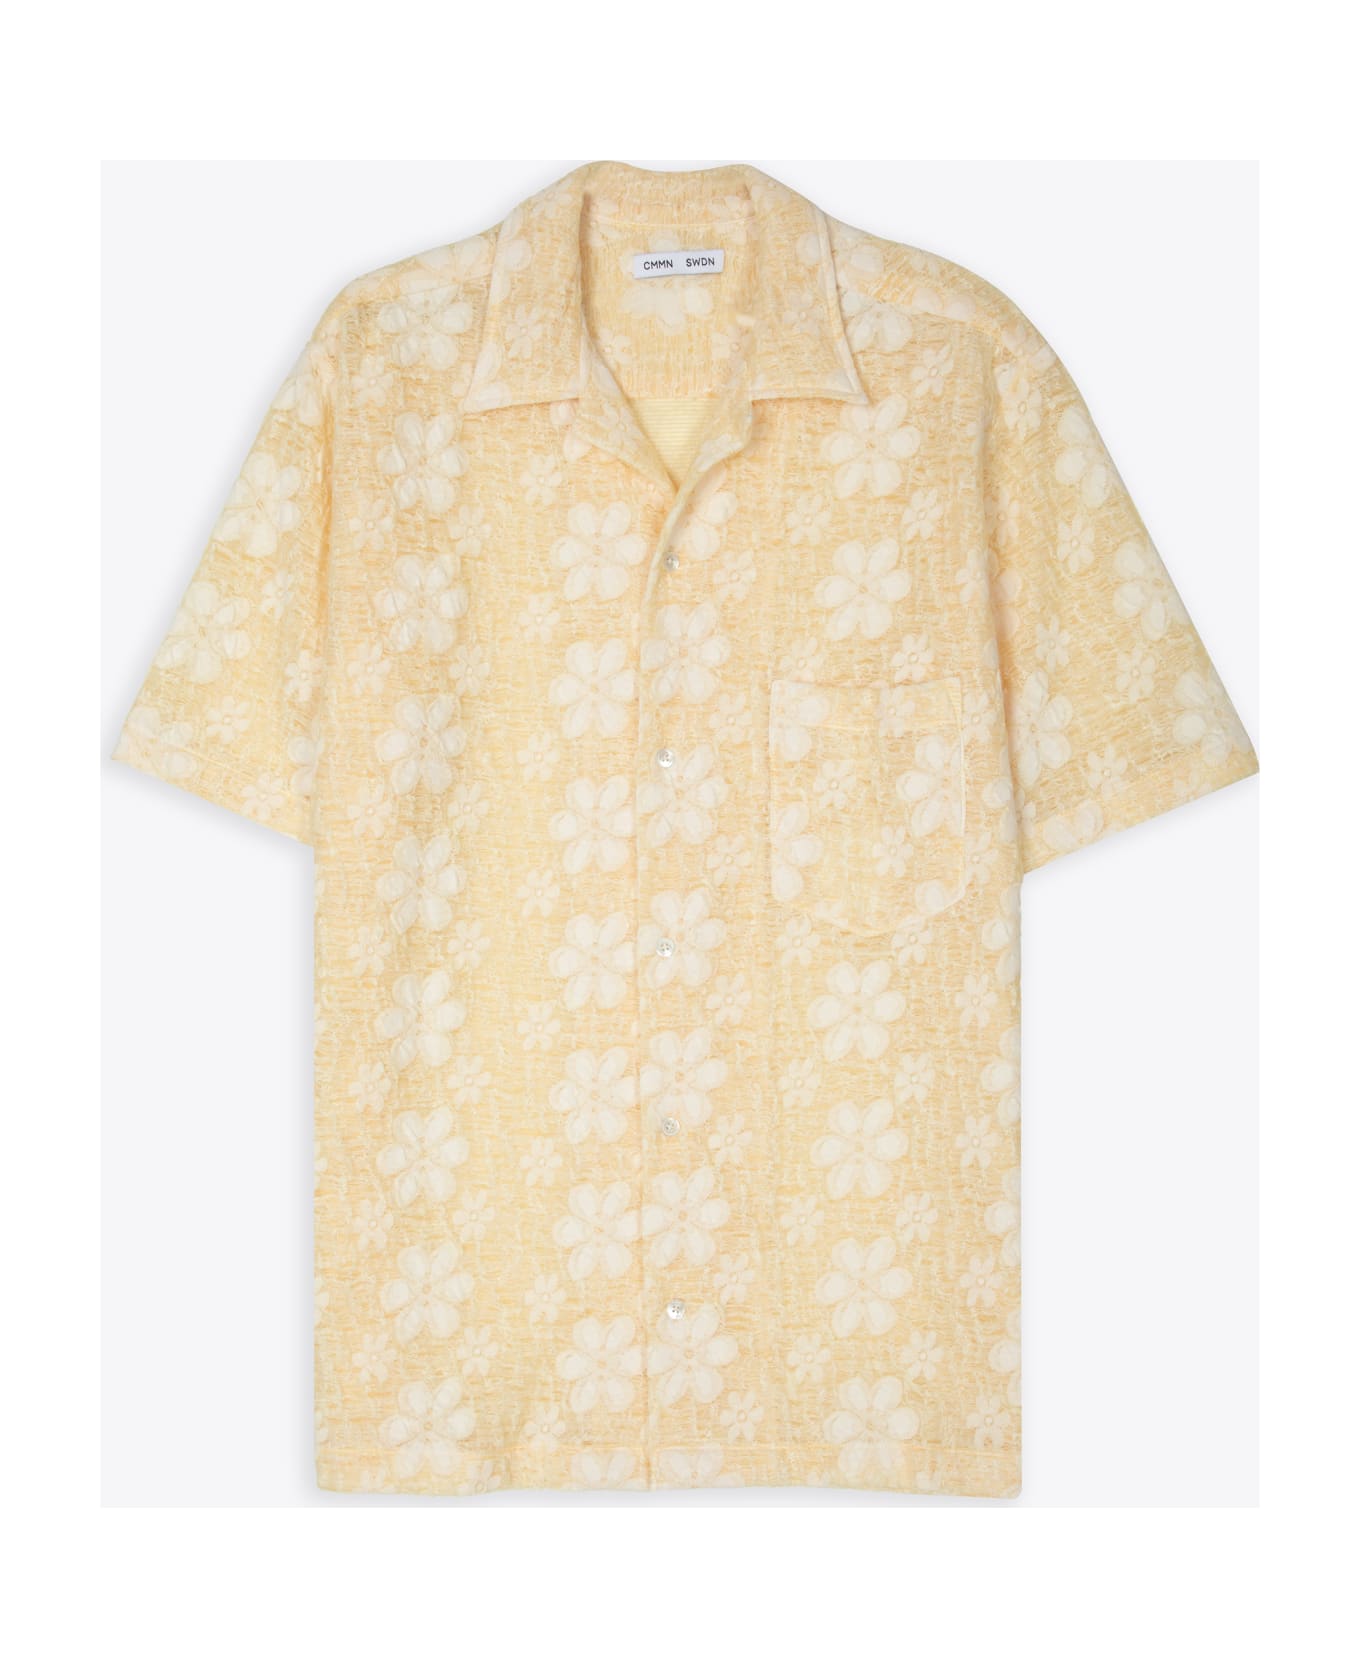 CMMN SWDN Short Sleeve Camp Collar Shirt In Regular Fit Yellow cotton blend floral shirt - Duncan - Giallo